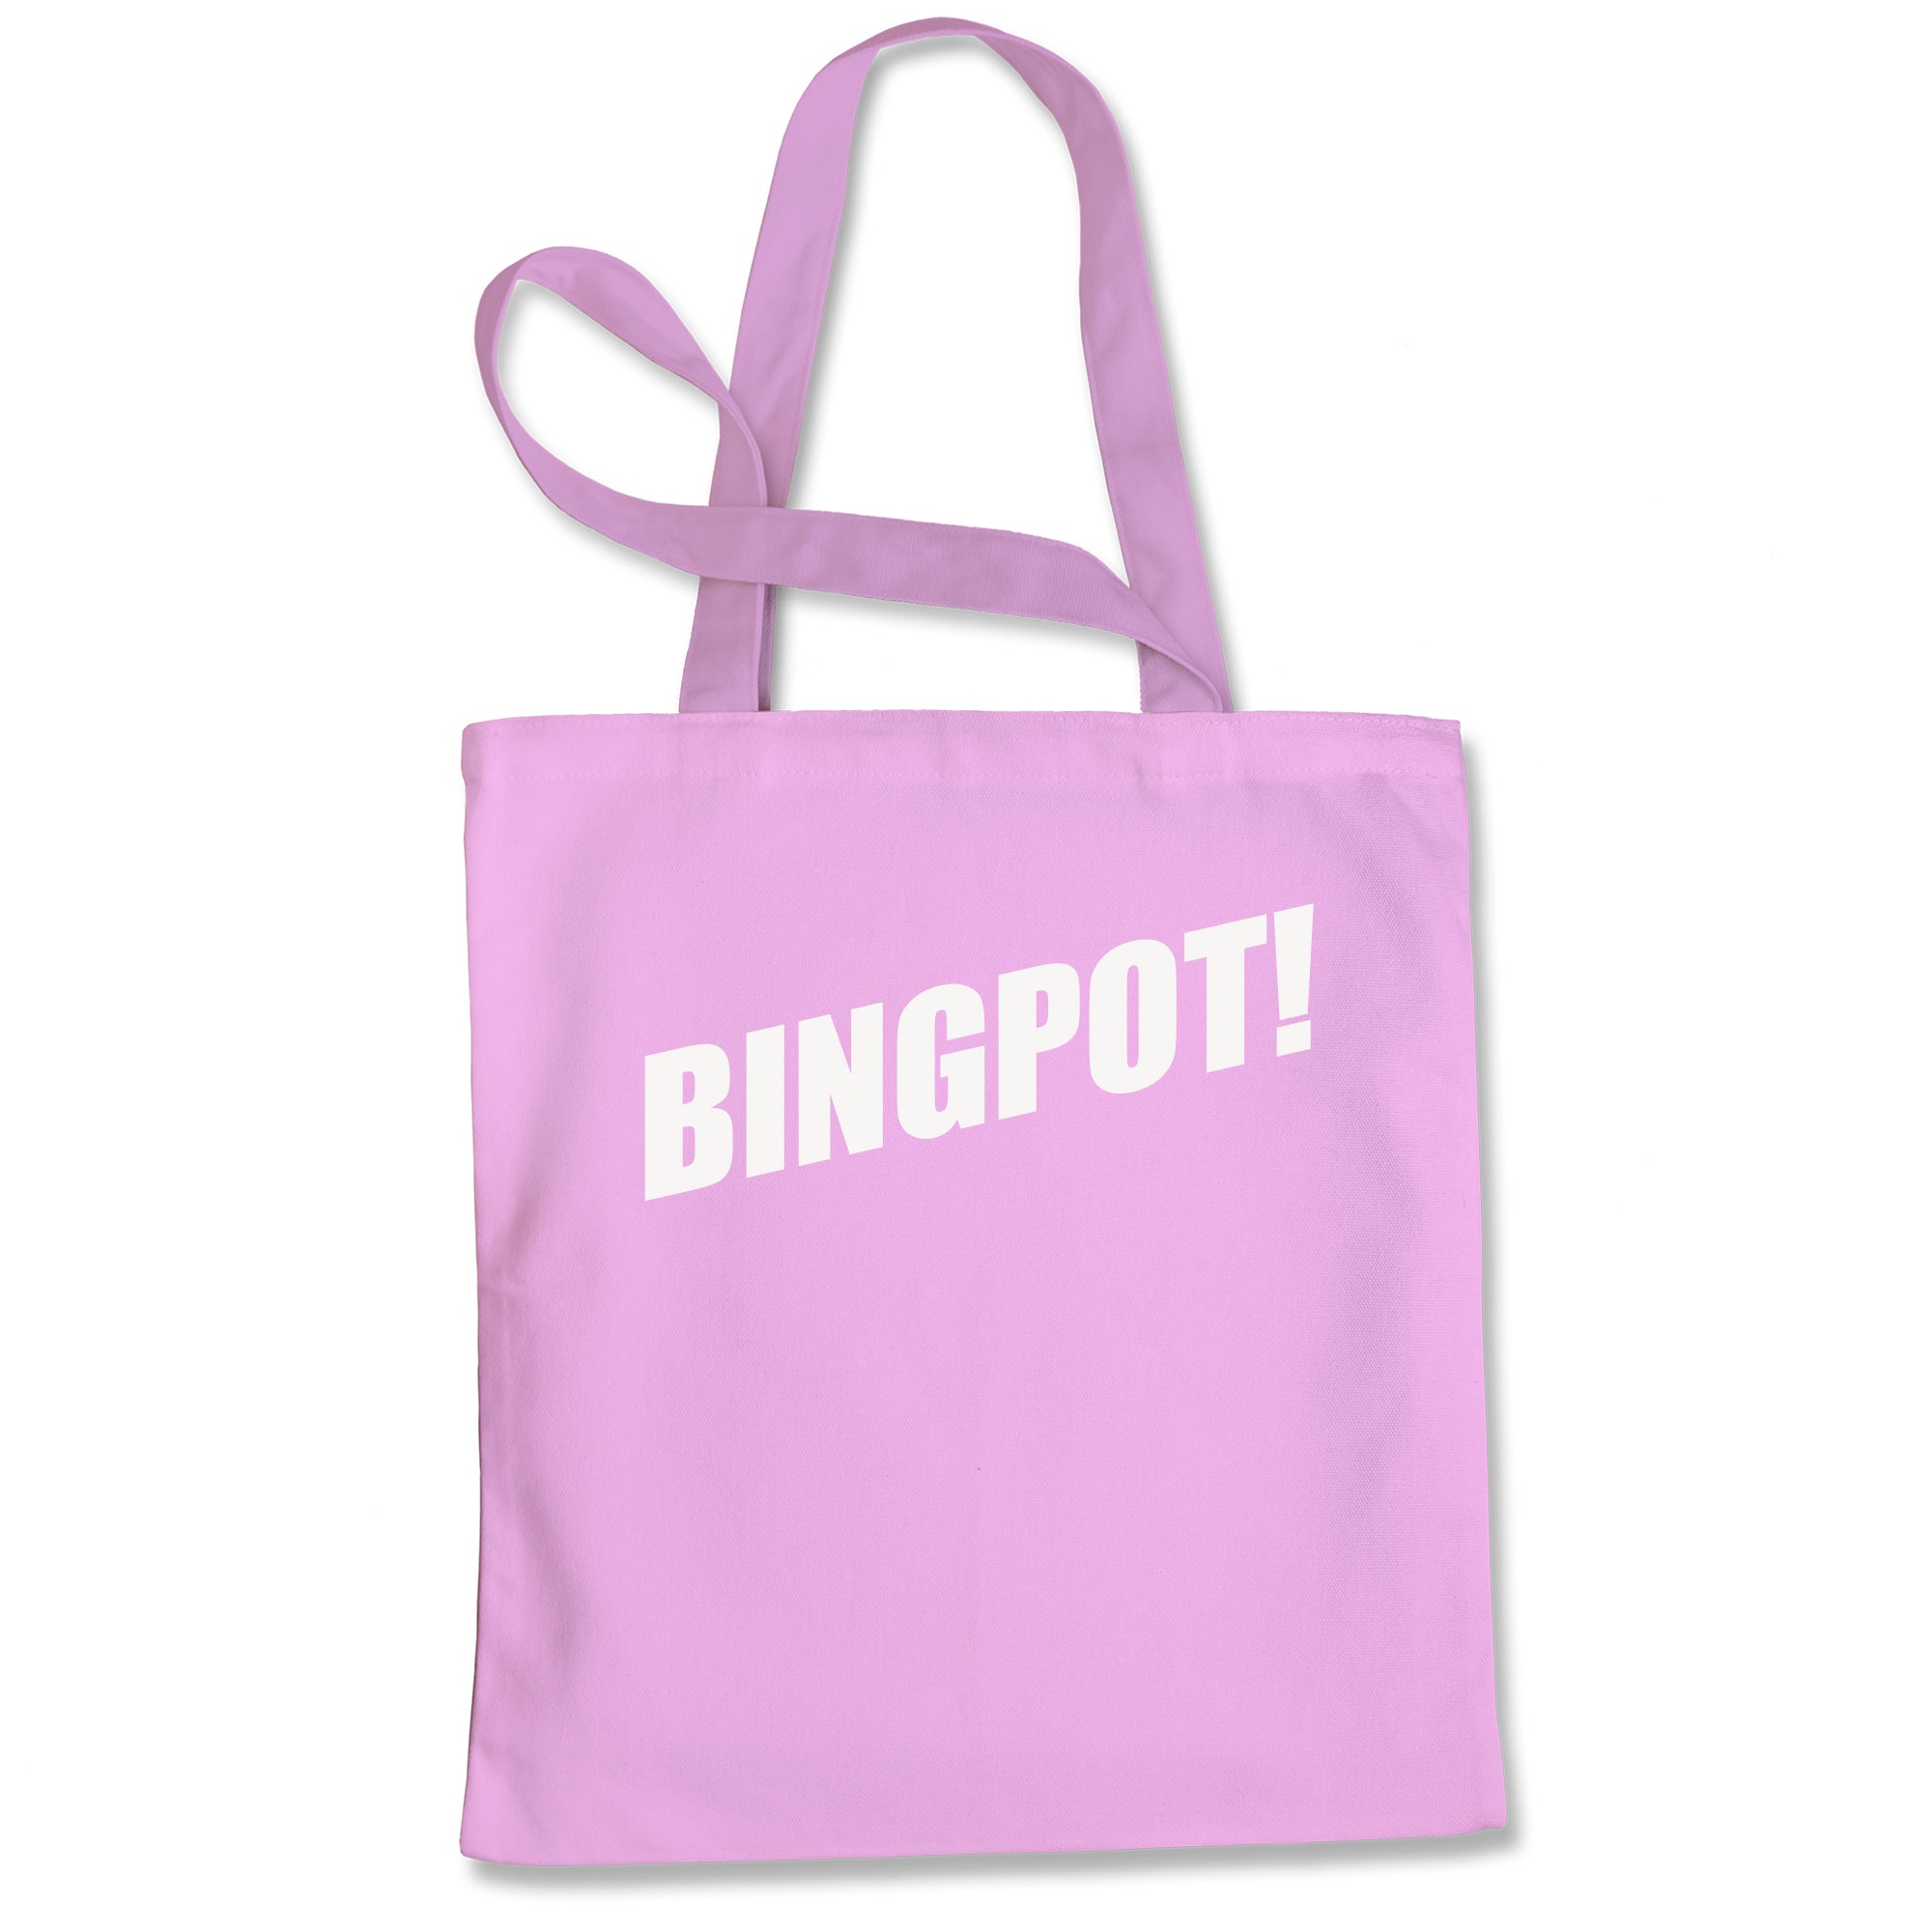 Bingpot! Funny Brooklyn 99 Tote Bag